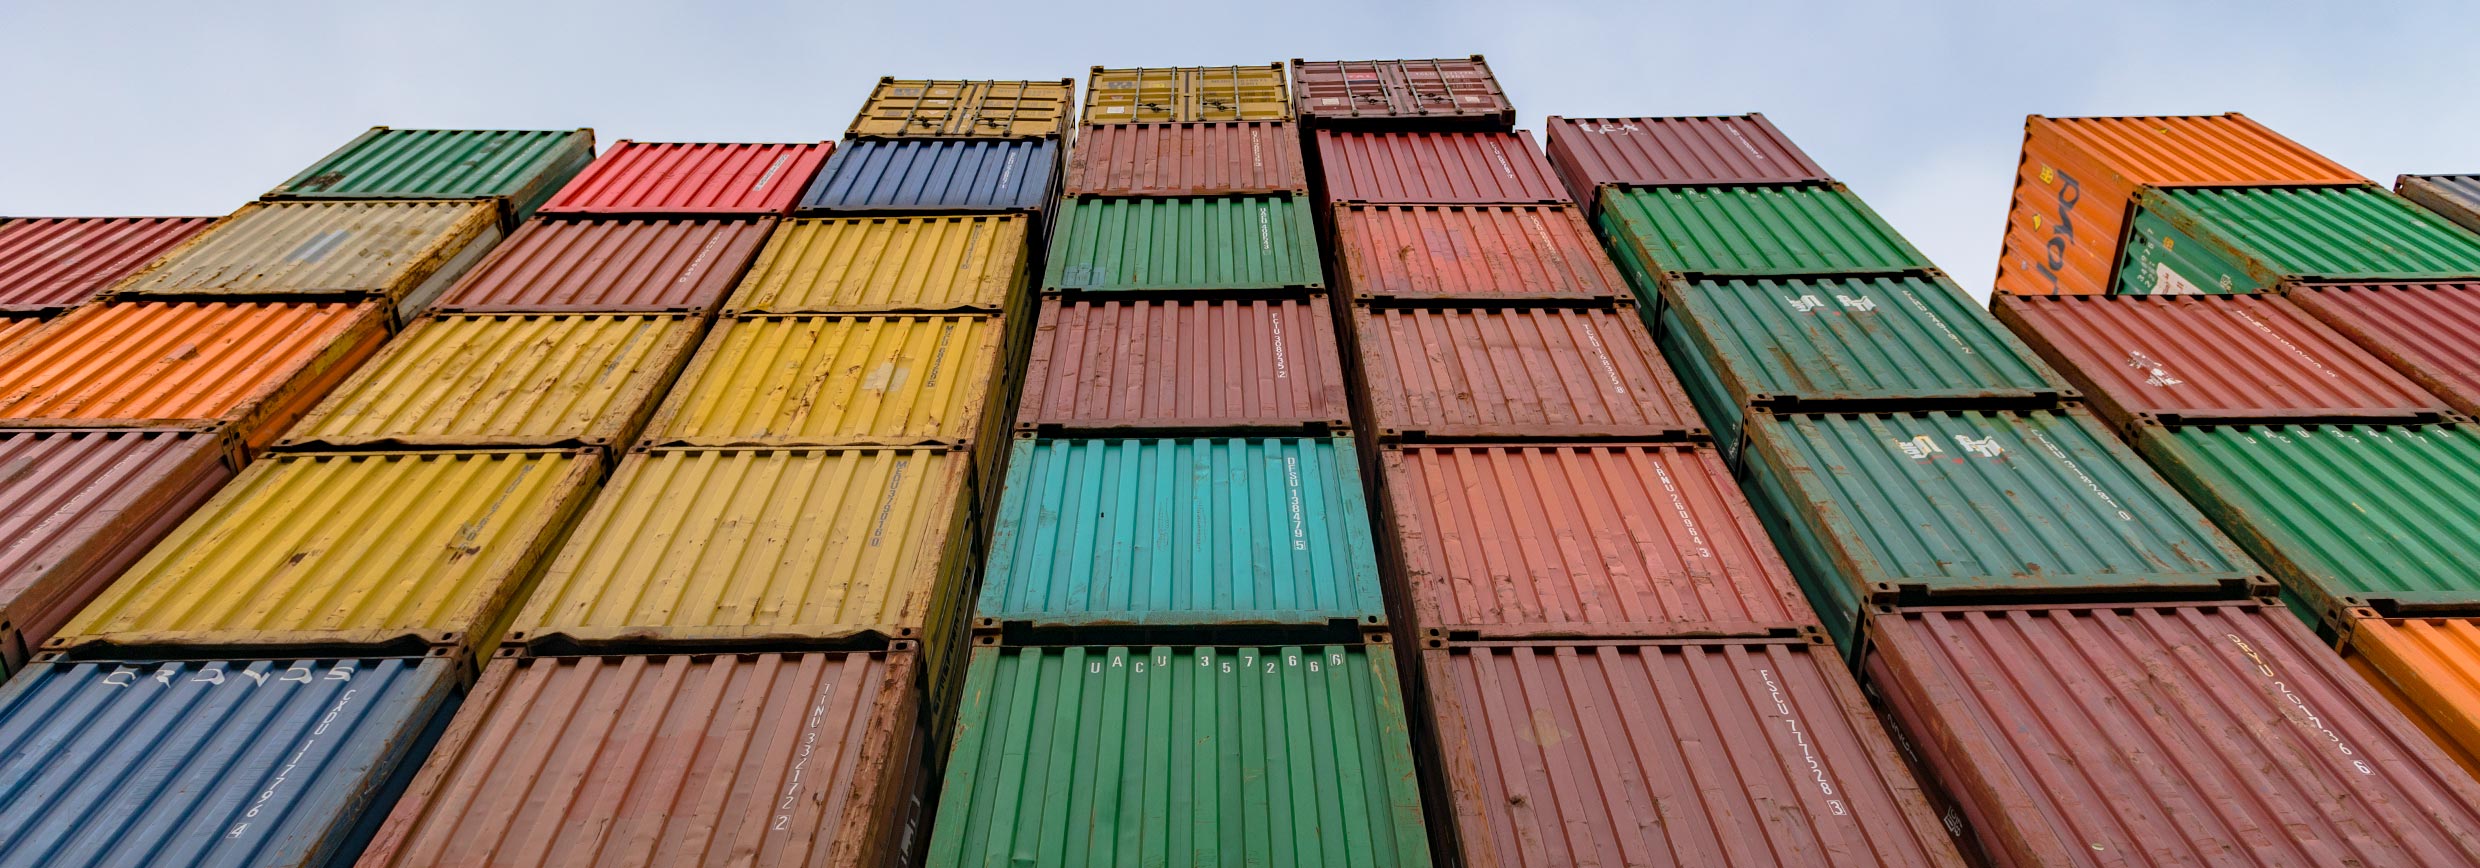 Containerlogistik Container Containerdepot